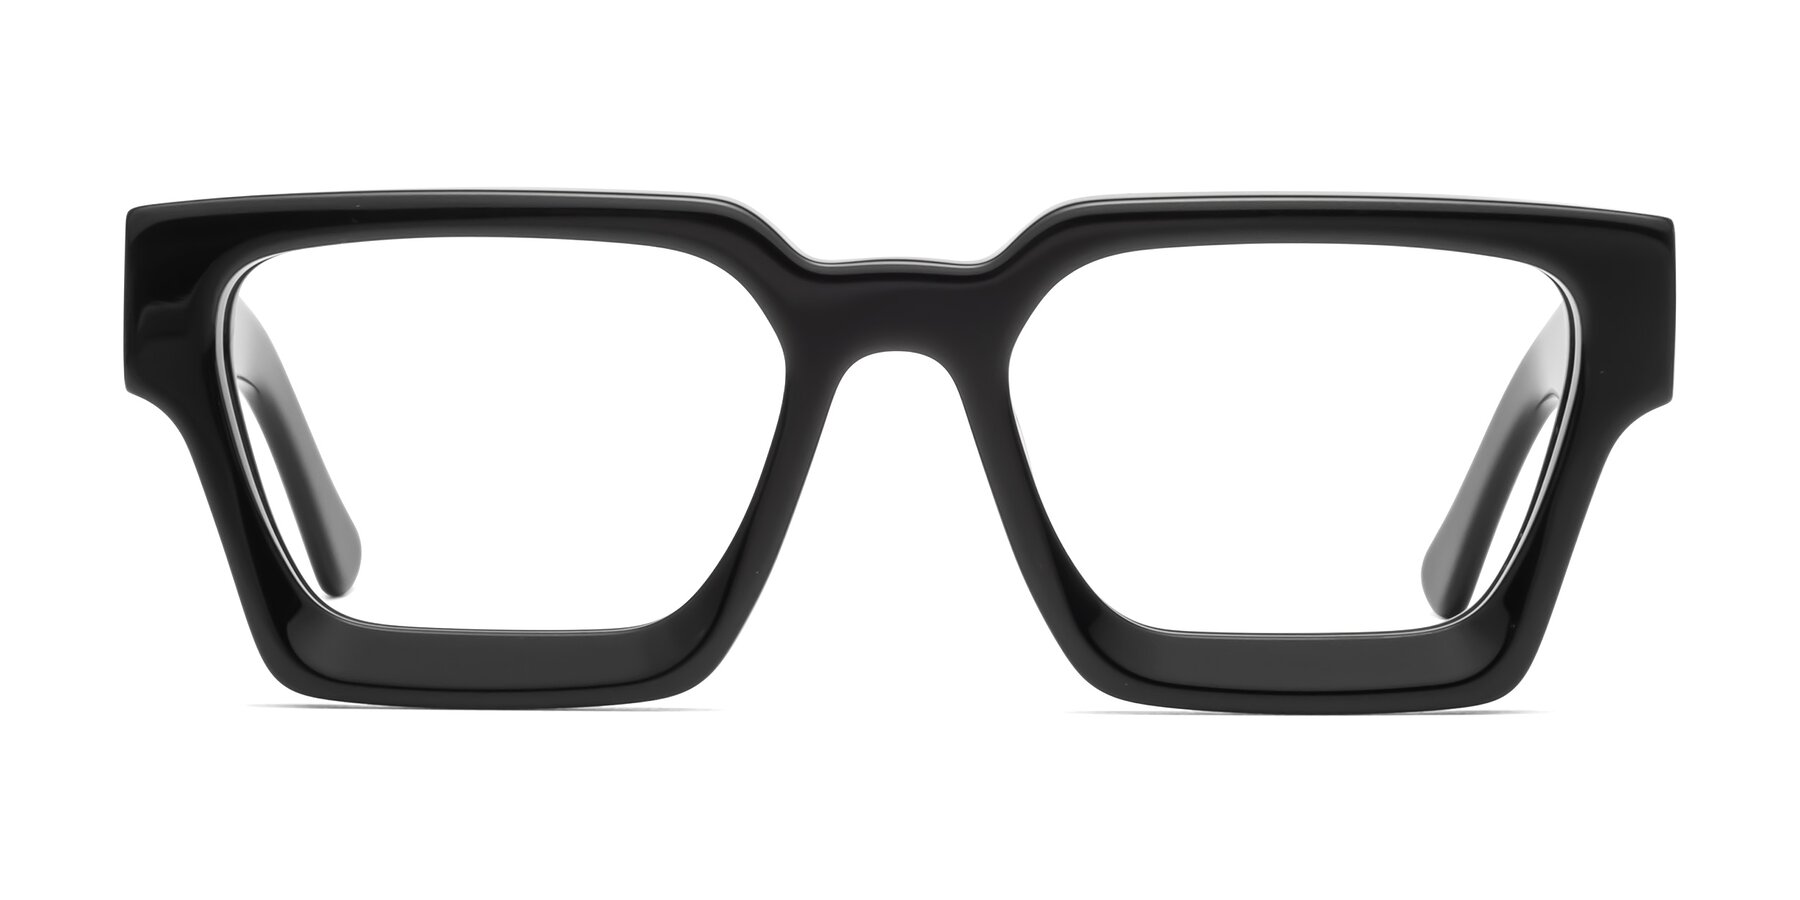 Powers - Black Sunglasses Frame